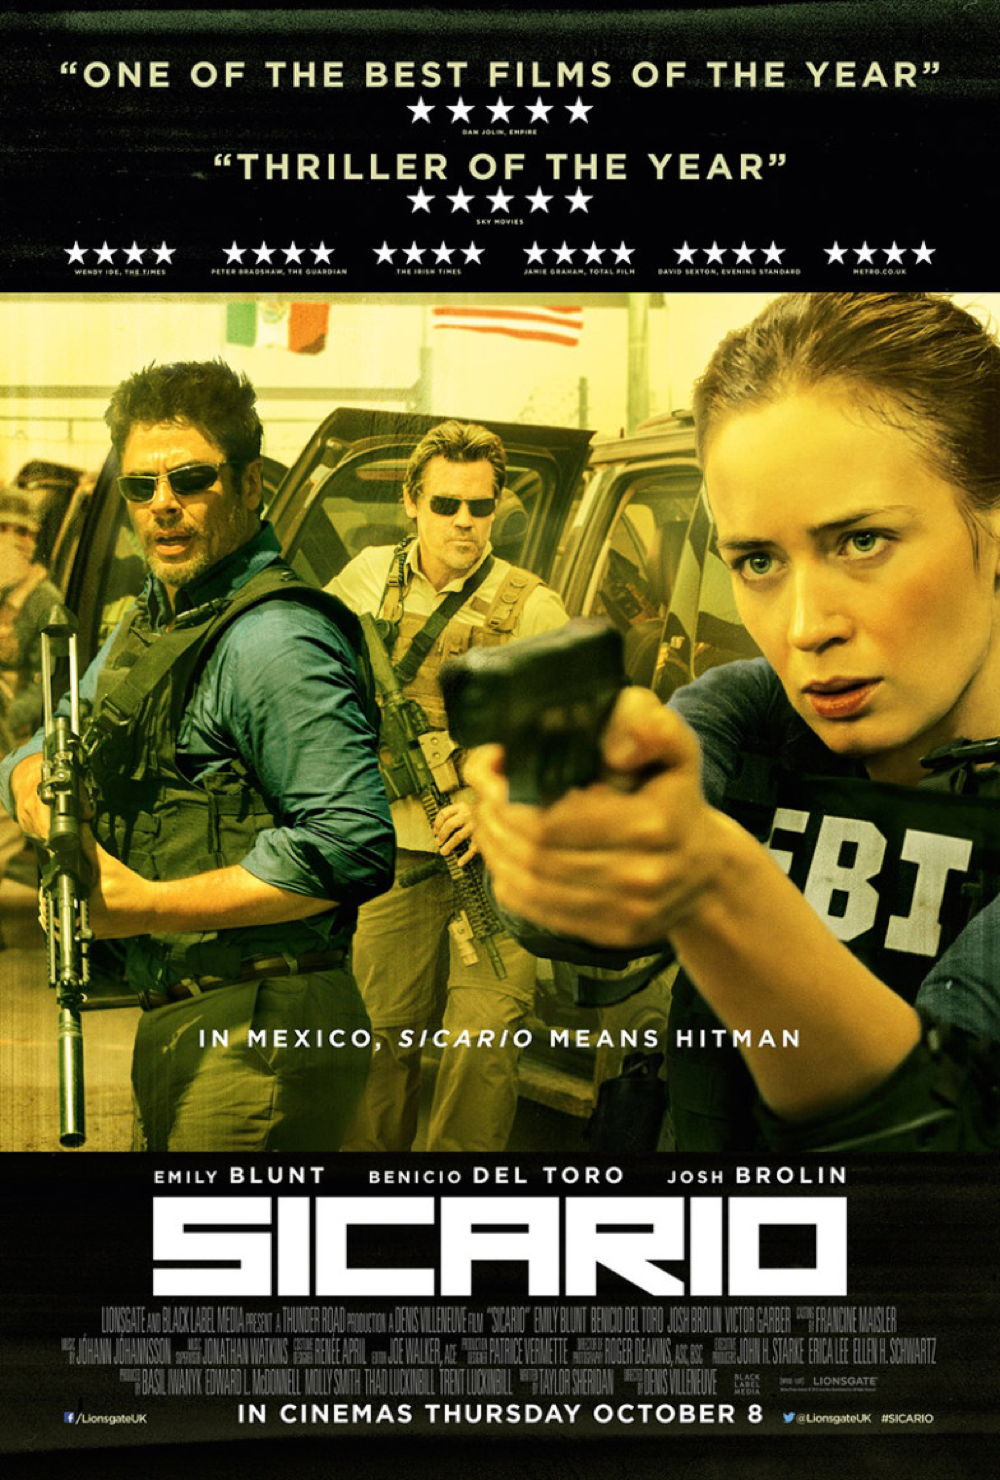 moviegoer.com: SICARIO movie poster